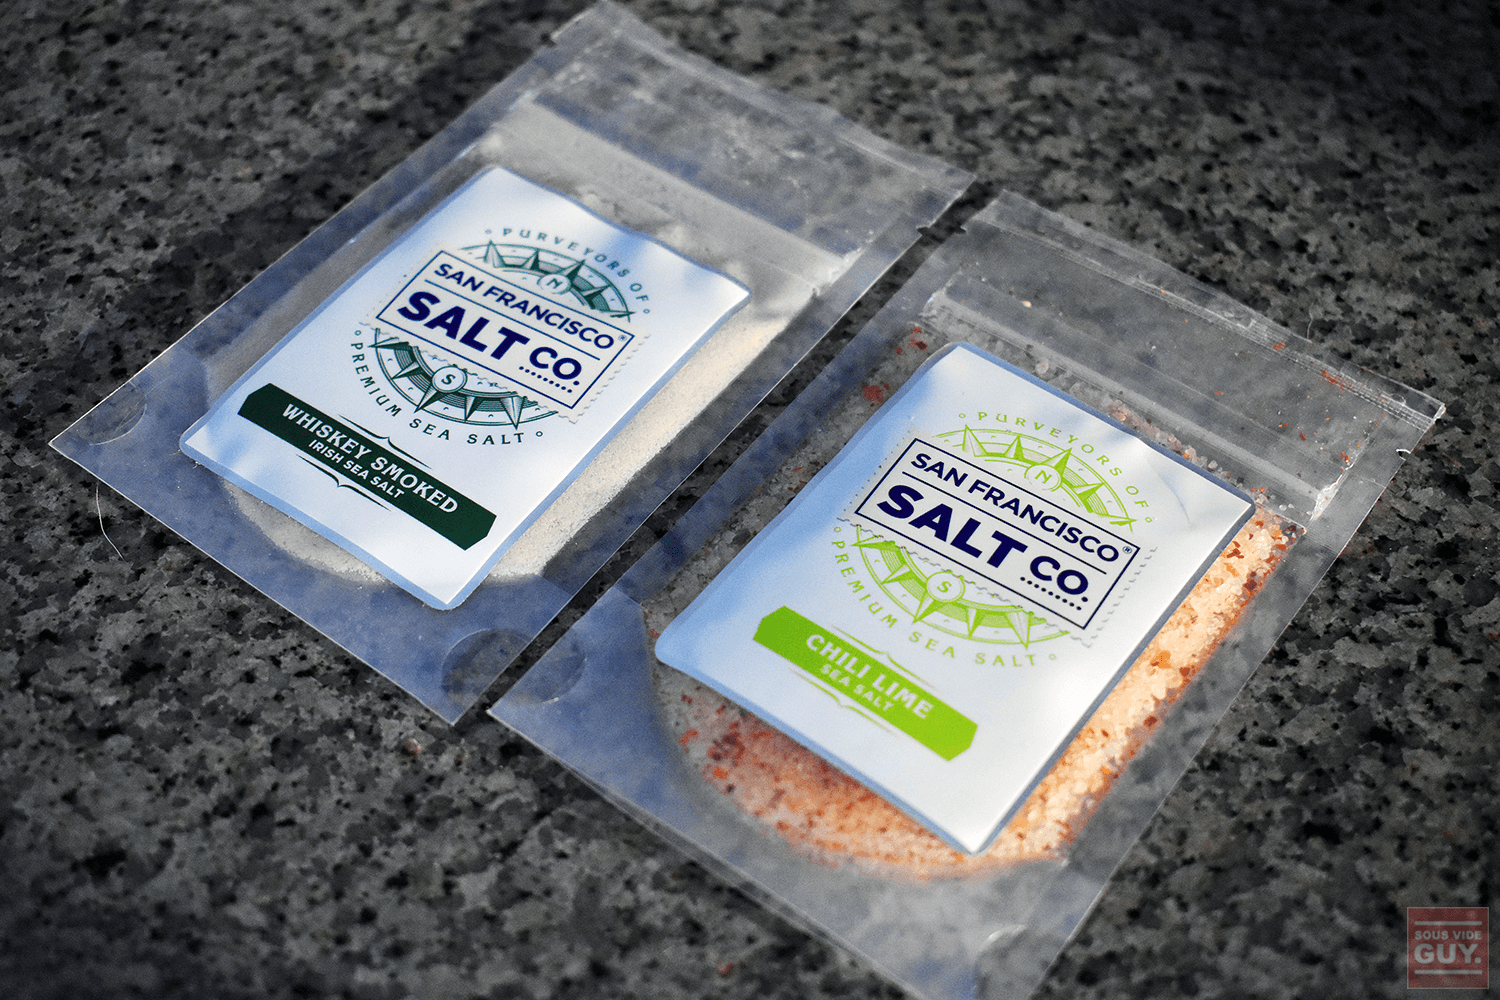 San Francisco Salt review